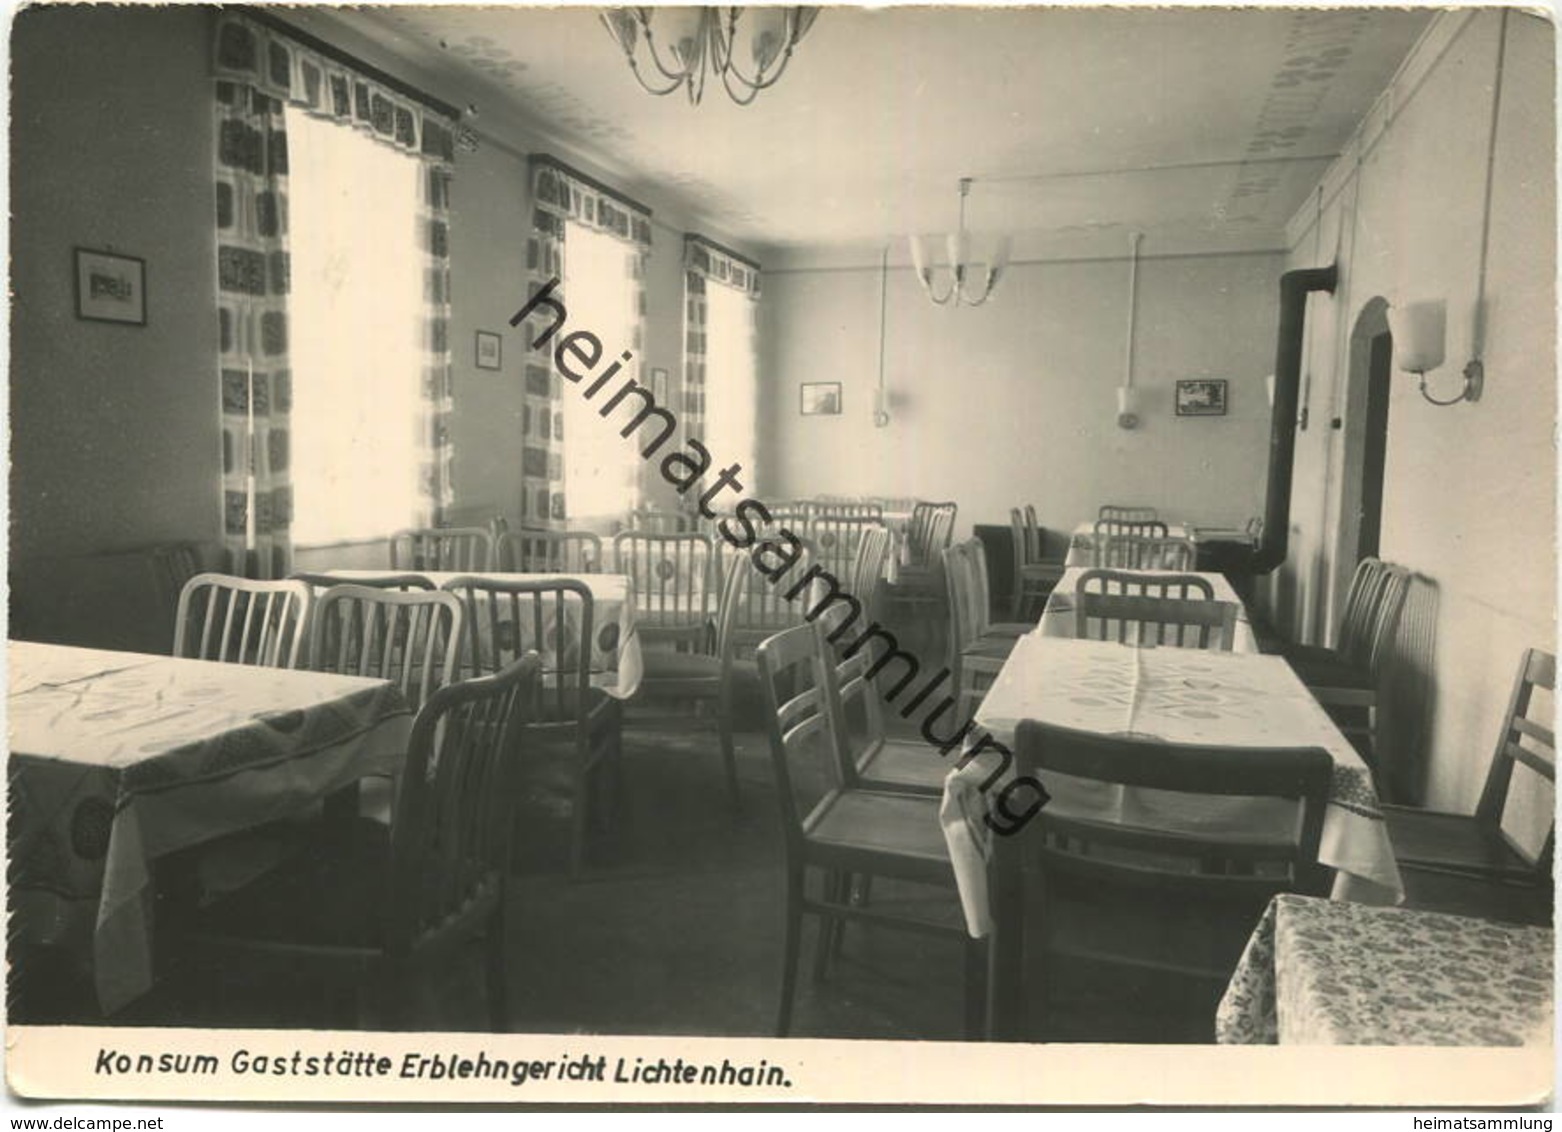 Lichtenhain - Konsum Gaststätte Erblehngericht - Foto-AK Grossformat Handabzug - Verlag H. Wagner Hinterhermsdorf - Sebnitz